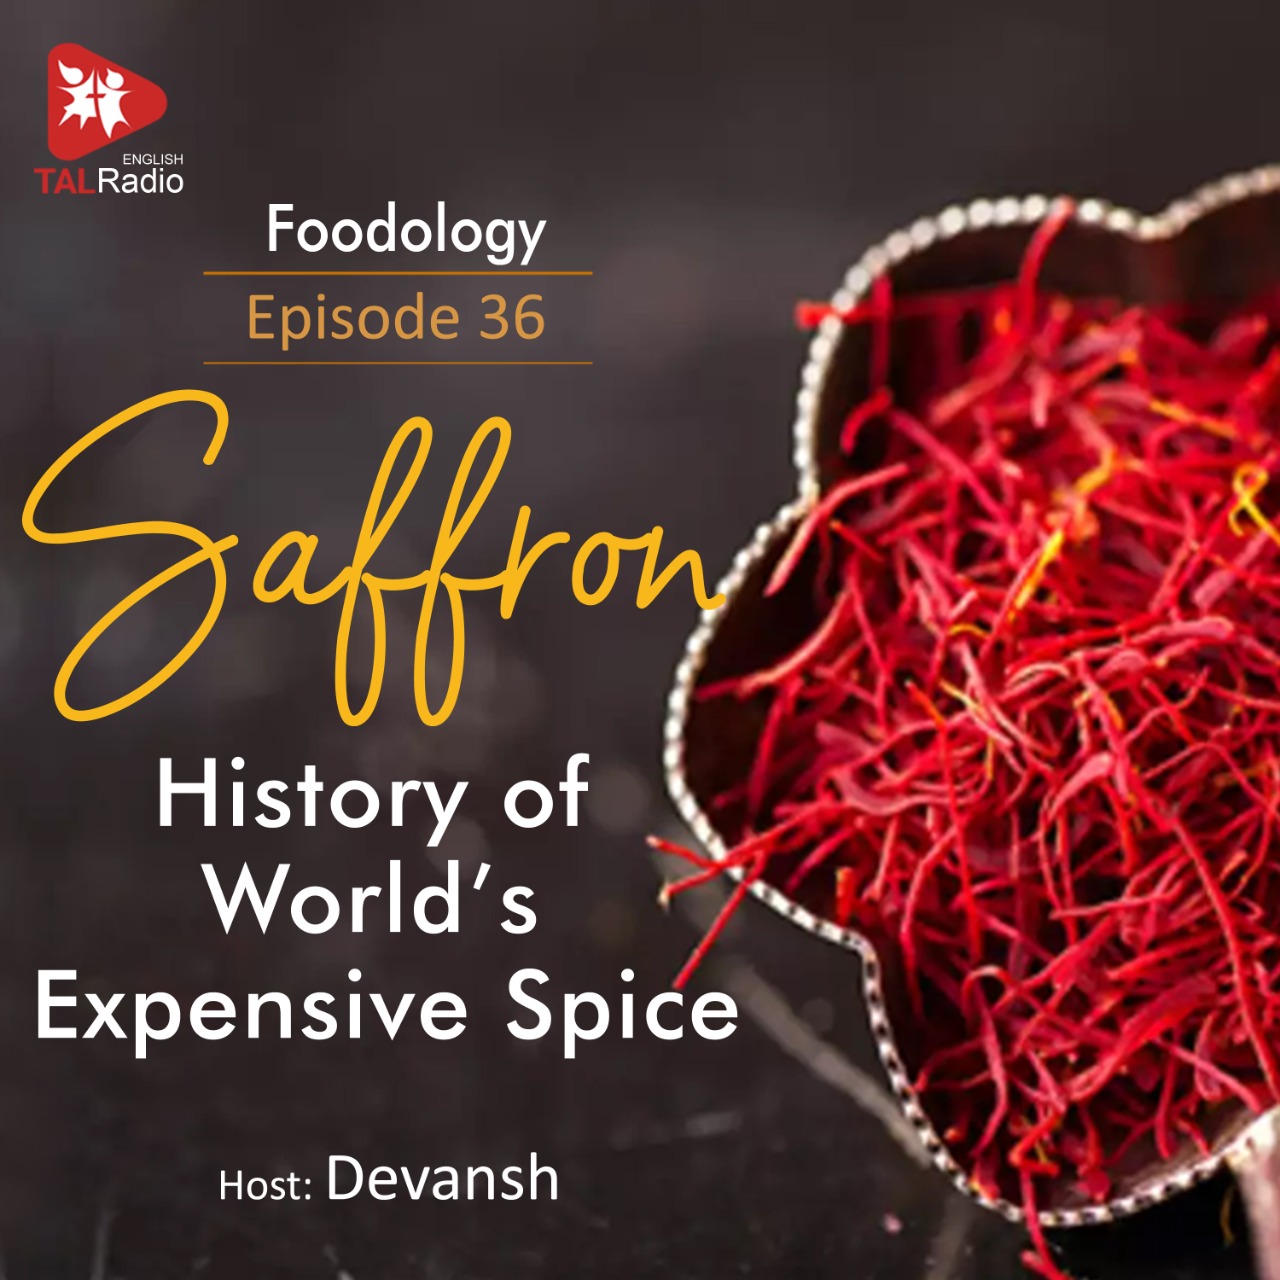 History of World's Expensive Spice - Saffron